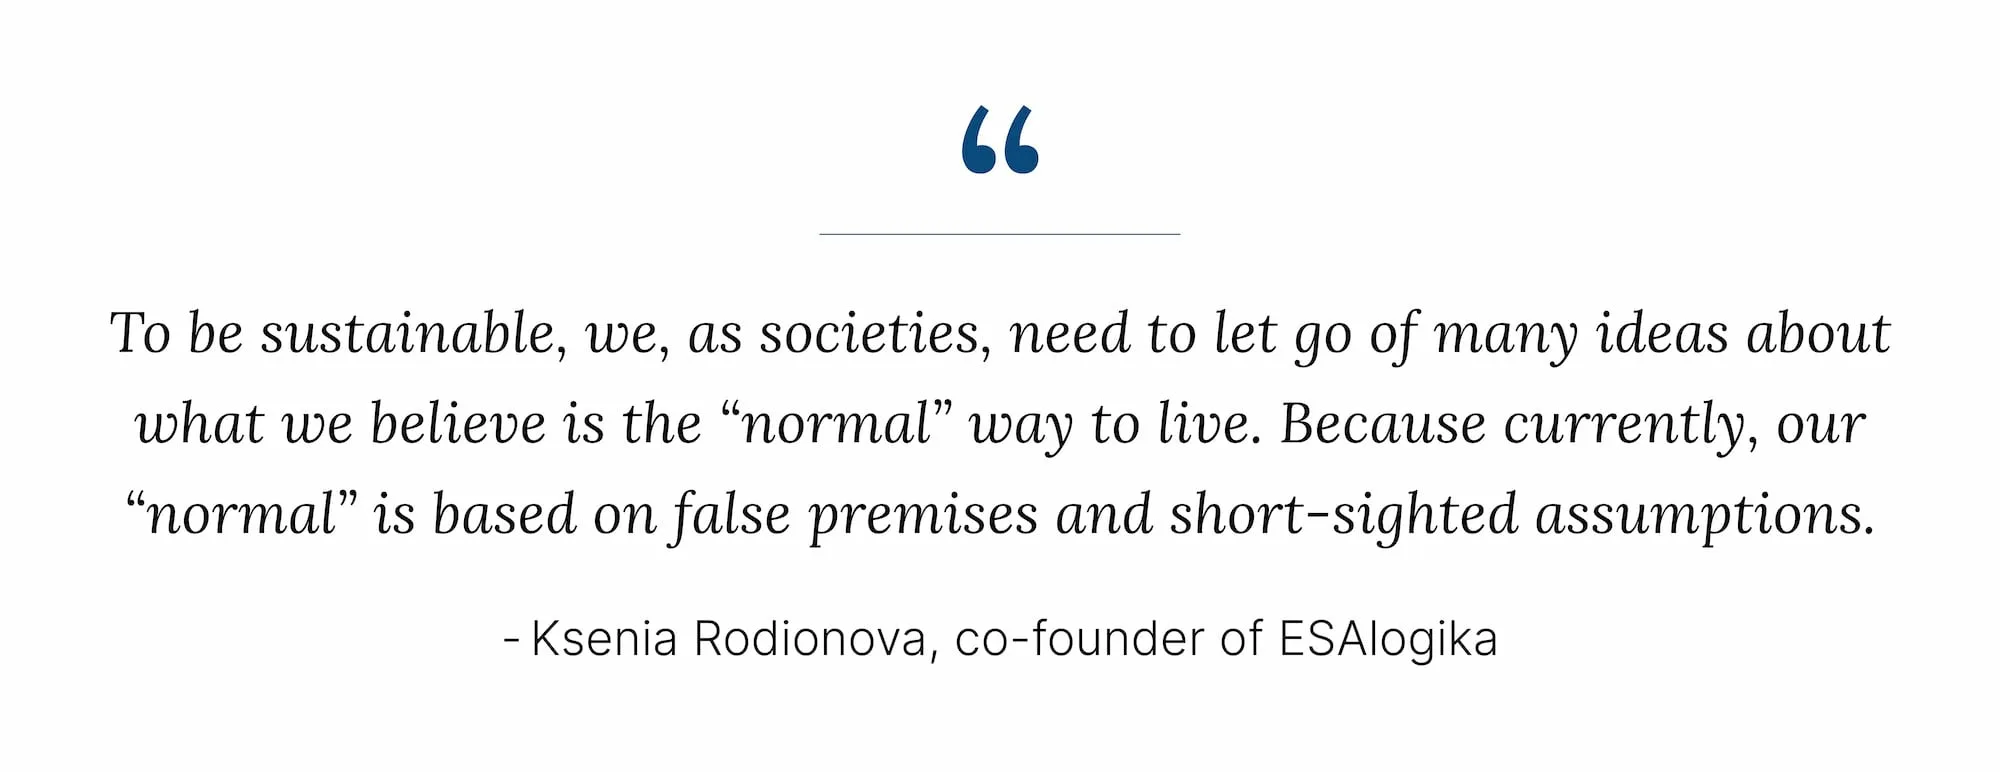 Akepa Interview with Ksenia Rodionova, co-founder of ESAlogika